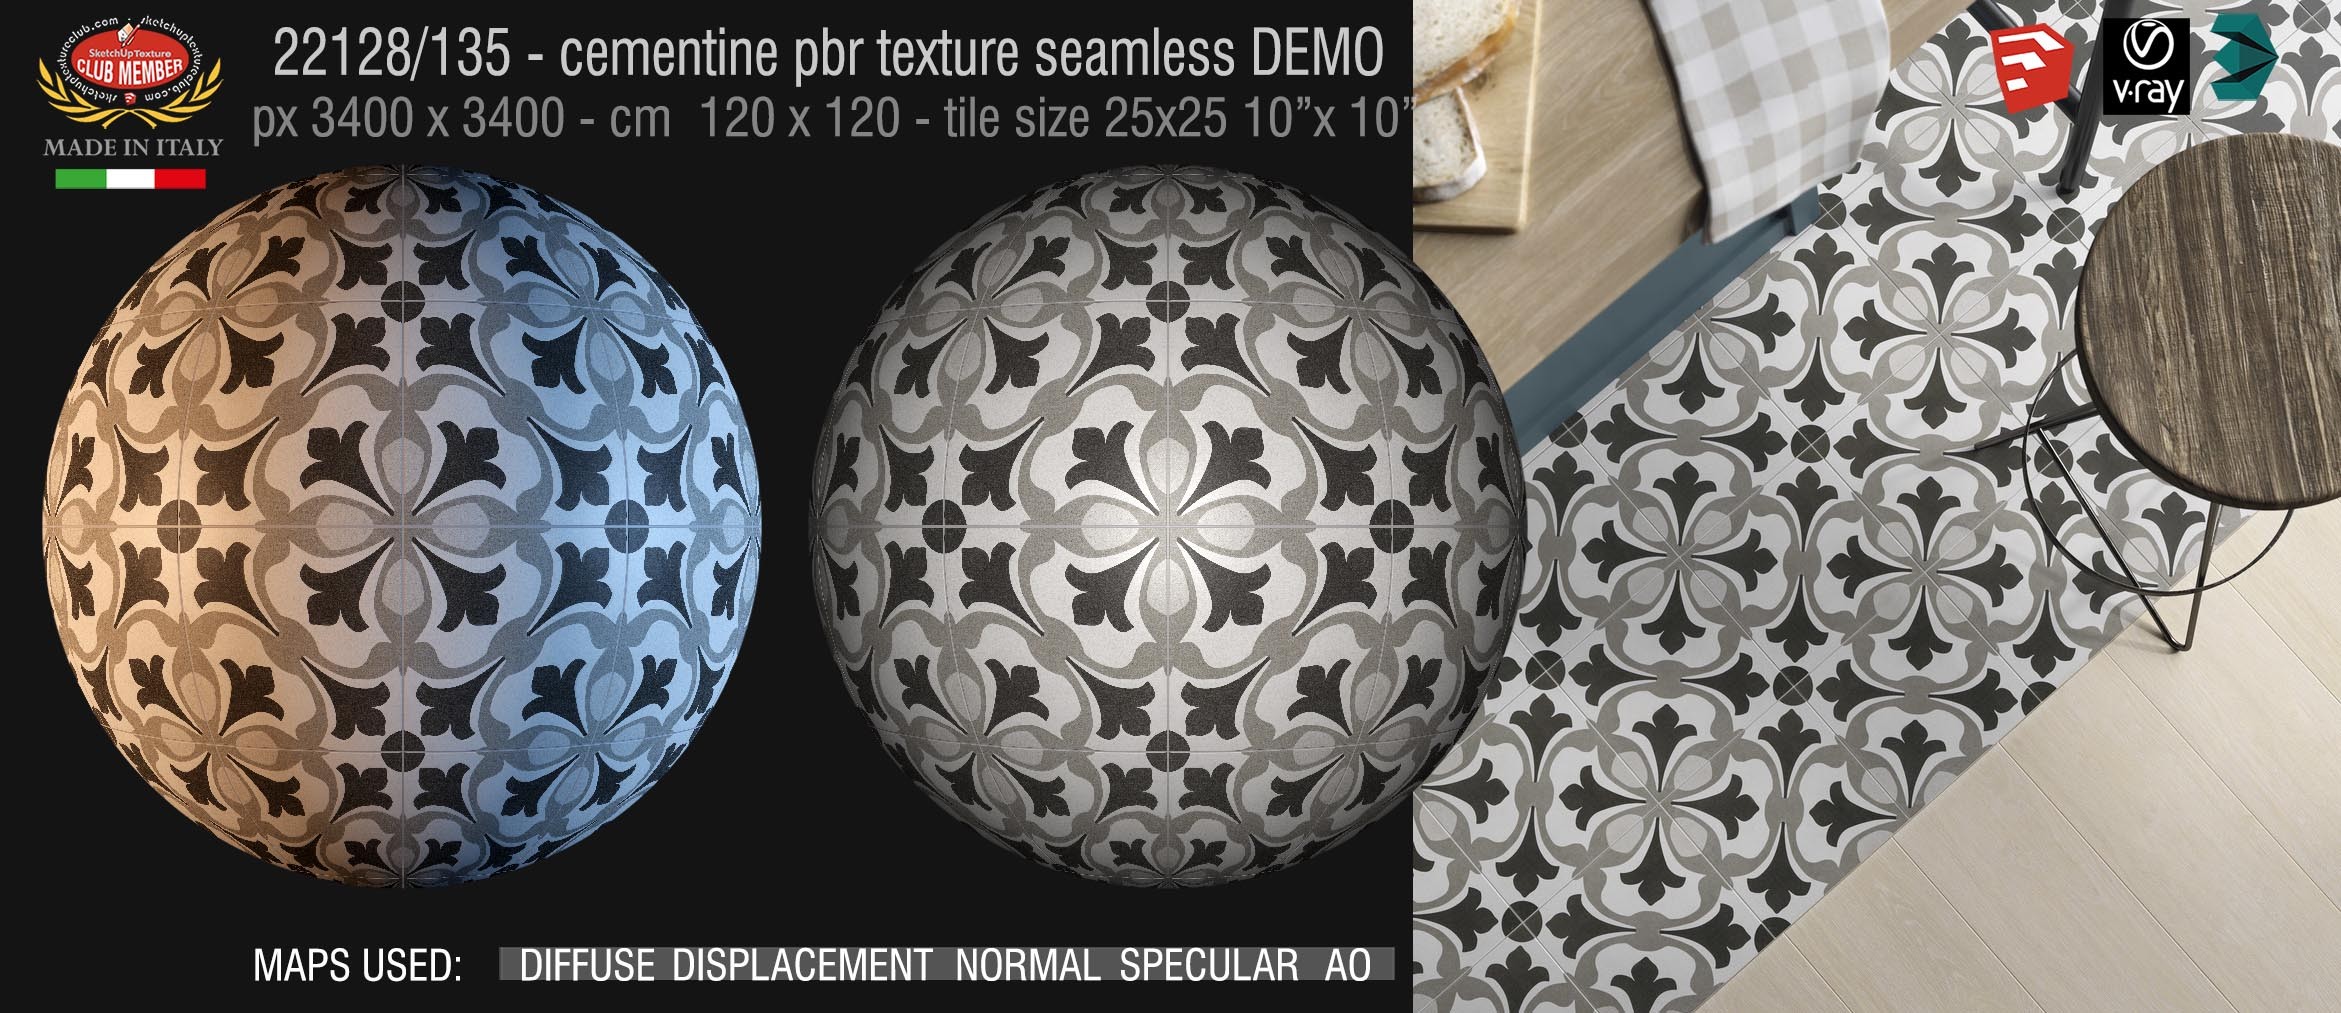 22128/135 cementine tiles Pbr seamless texture DEMO - porcelain stoneware concrete look